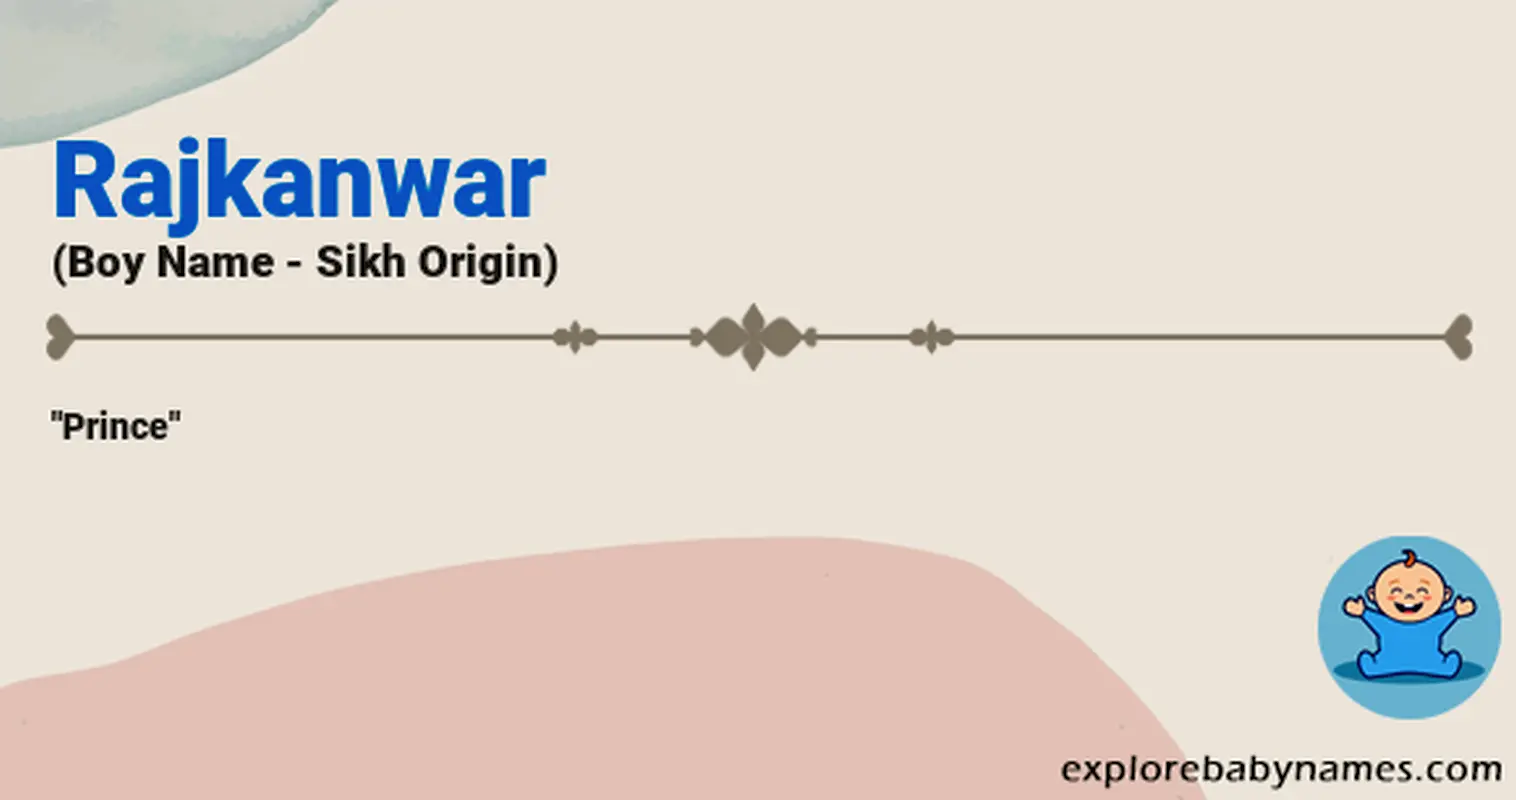 Meaning of Rajkanwar